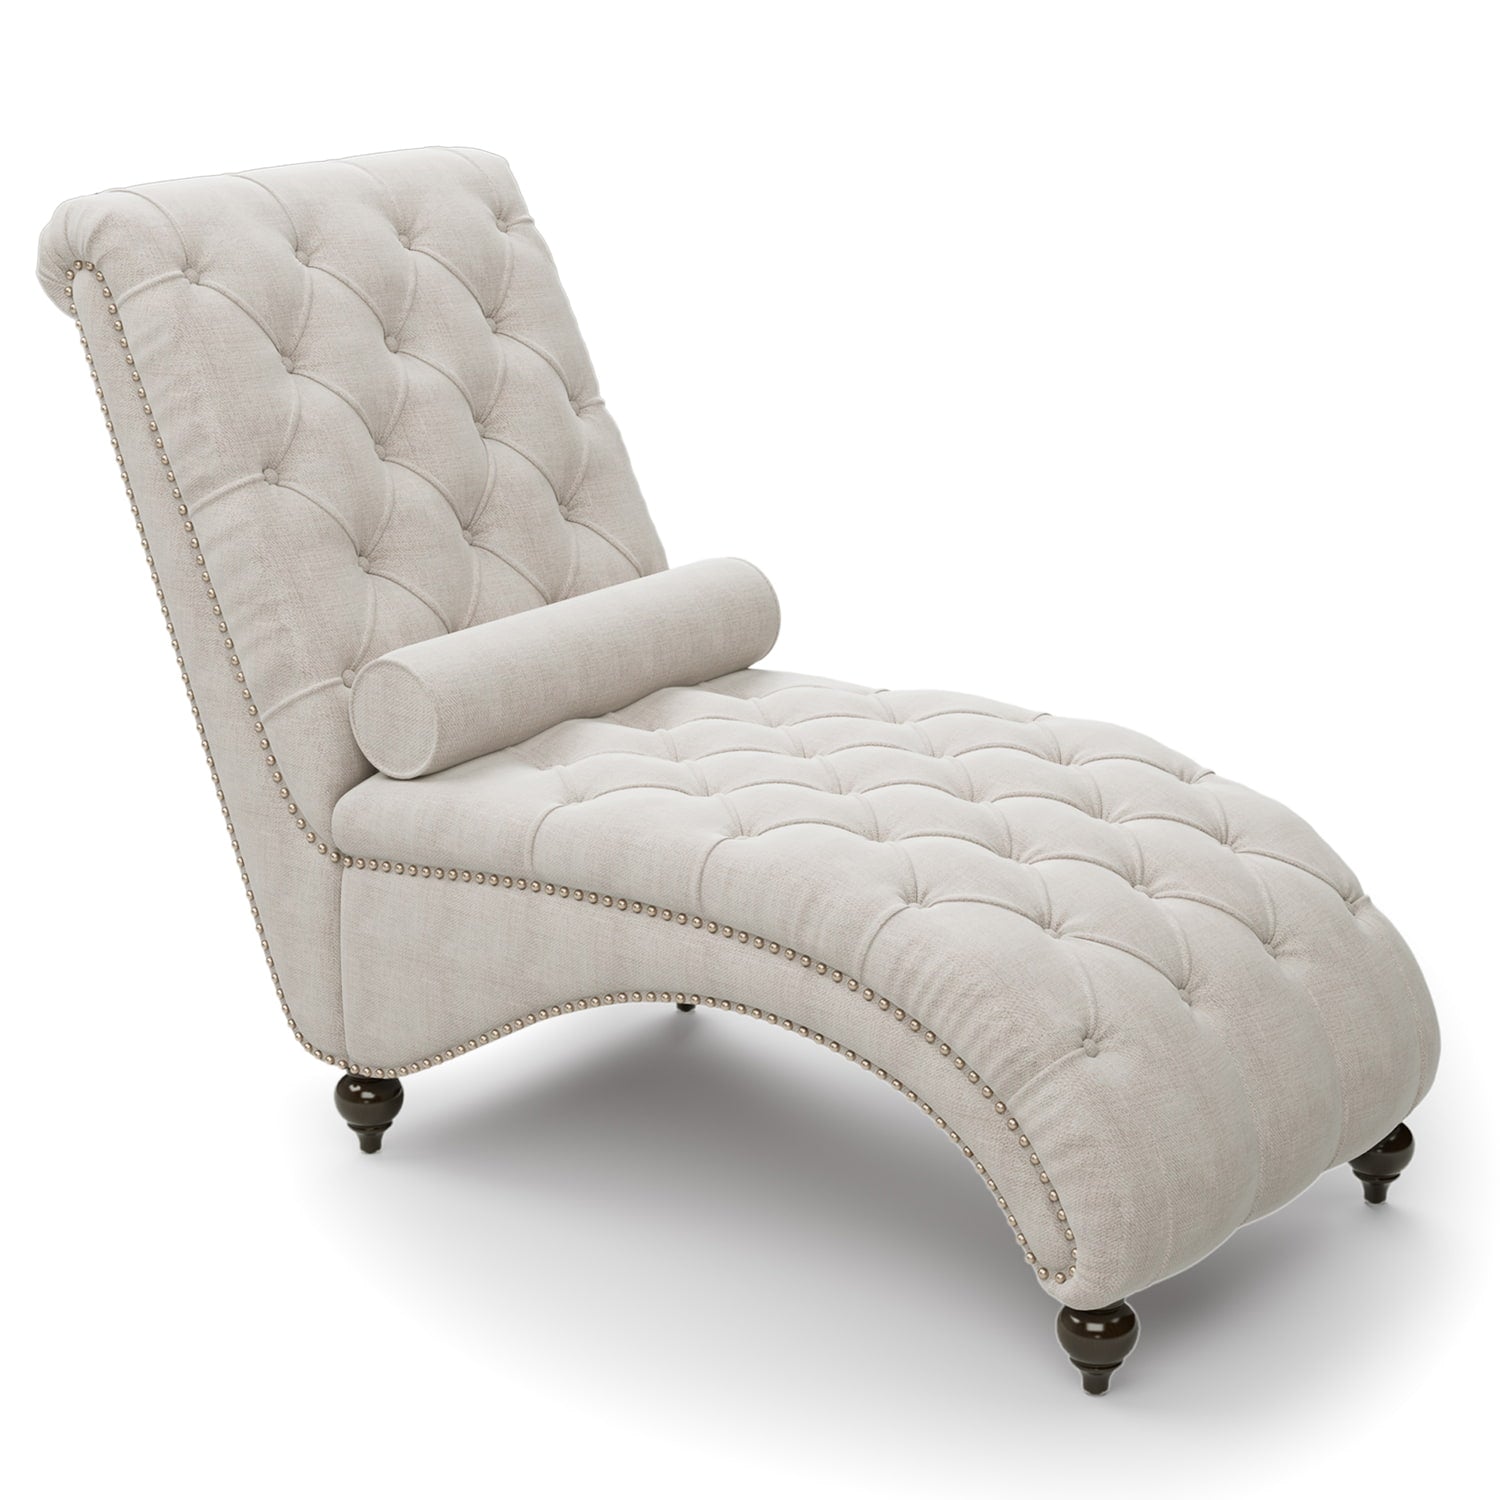 Light Beige Linen Fabric Lounge Button Tufted Leisure Sofa Gourd Wood Leg Studio Chaise With 1 Bolster Pillow-Boyel Living